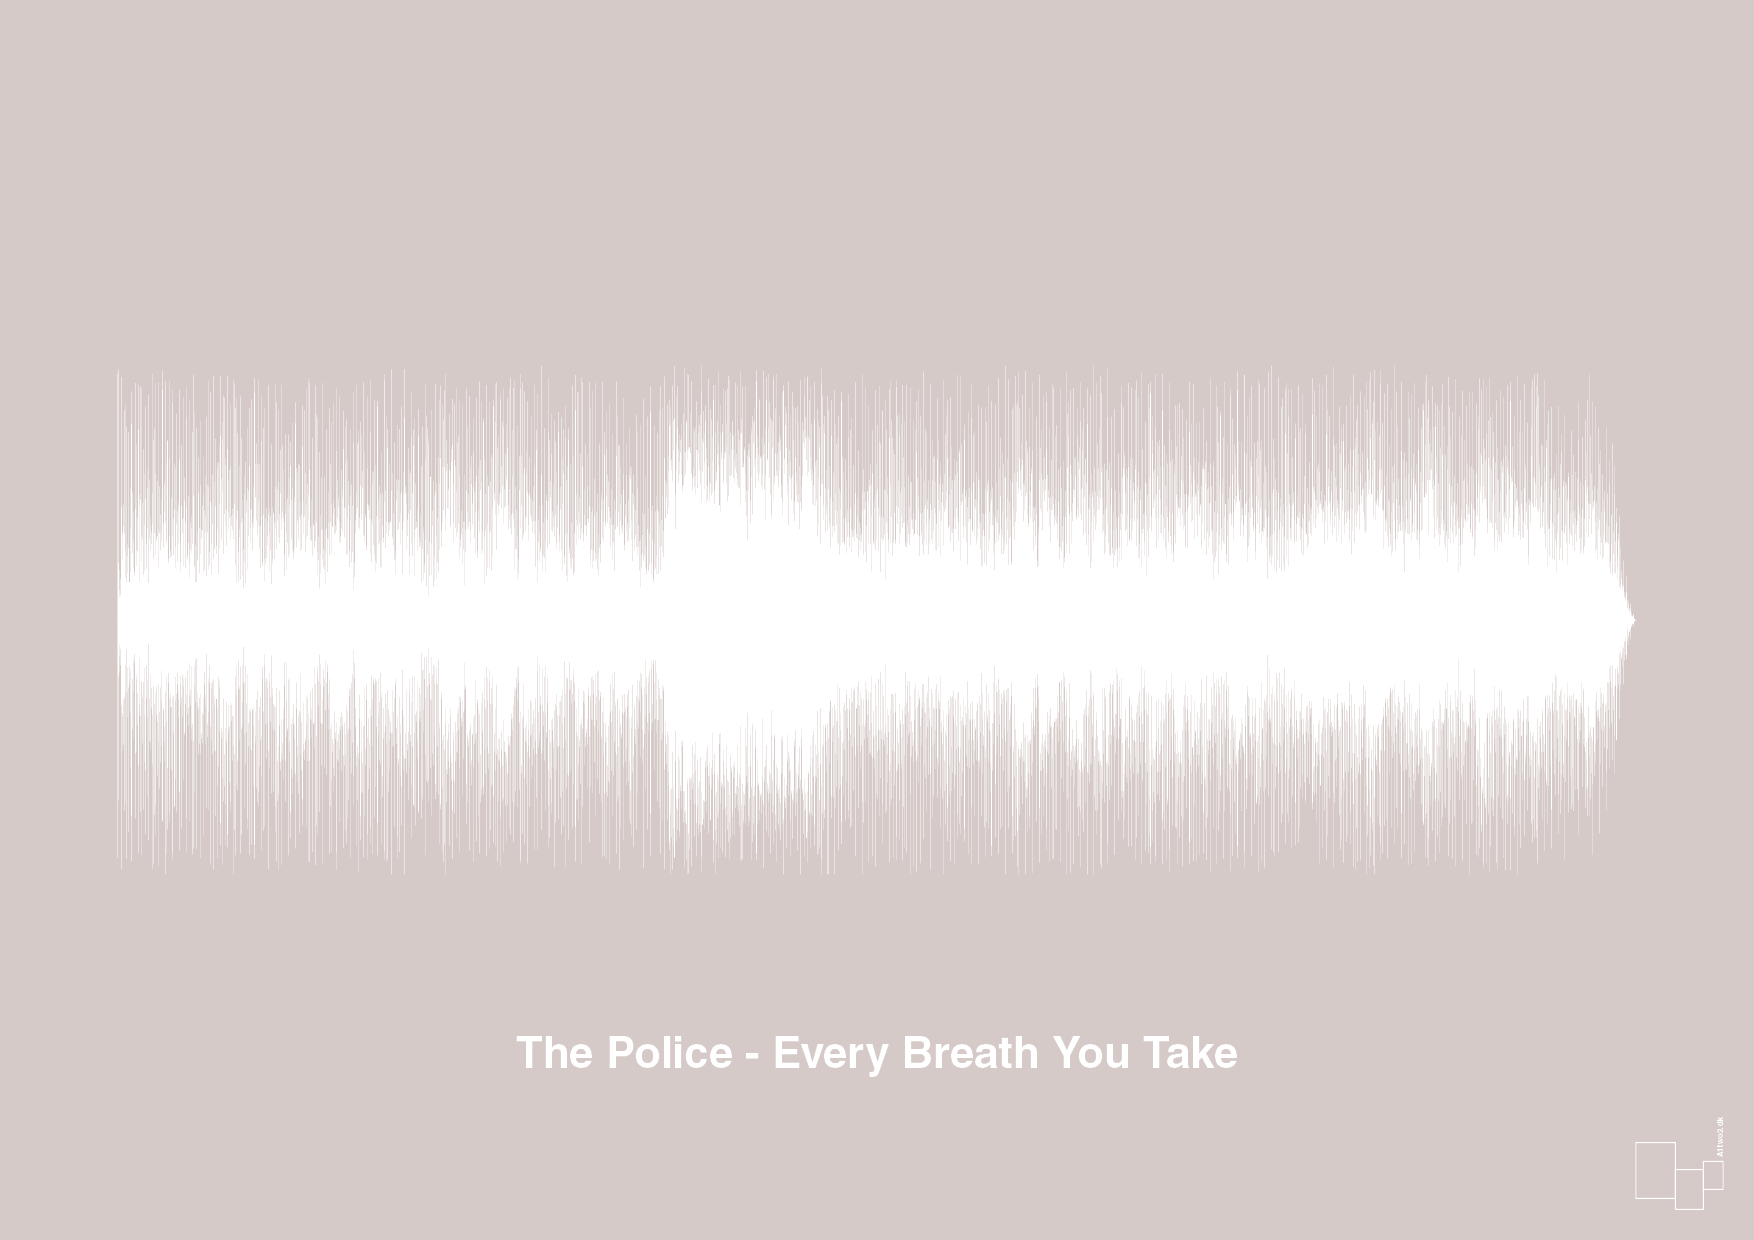 the police - every breath you take - Plakat med Musik i Broken Beige